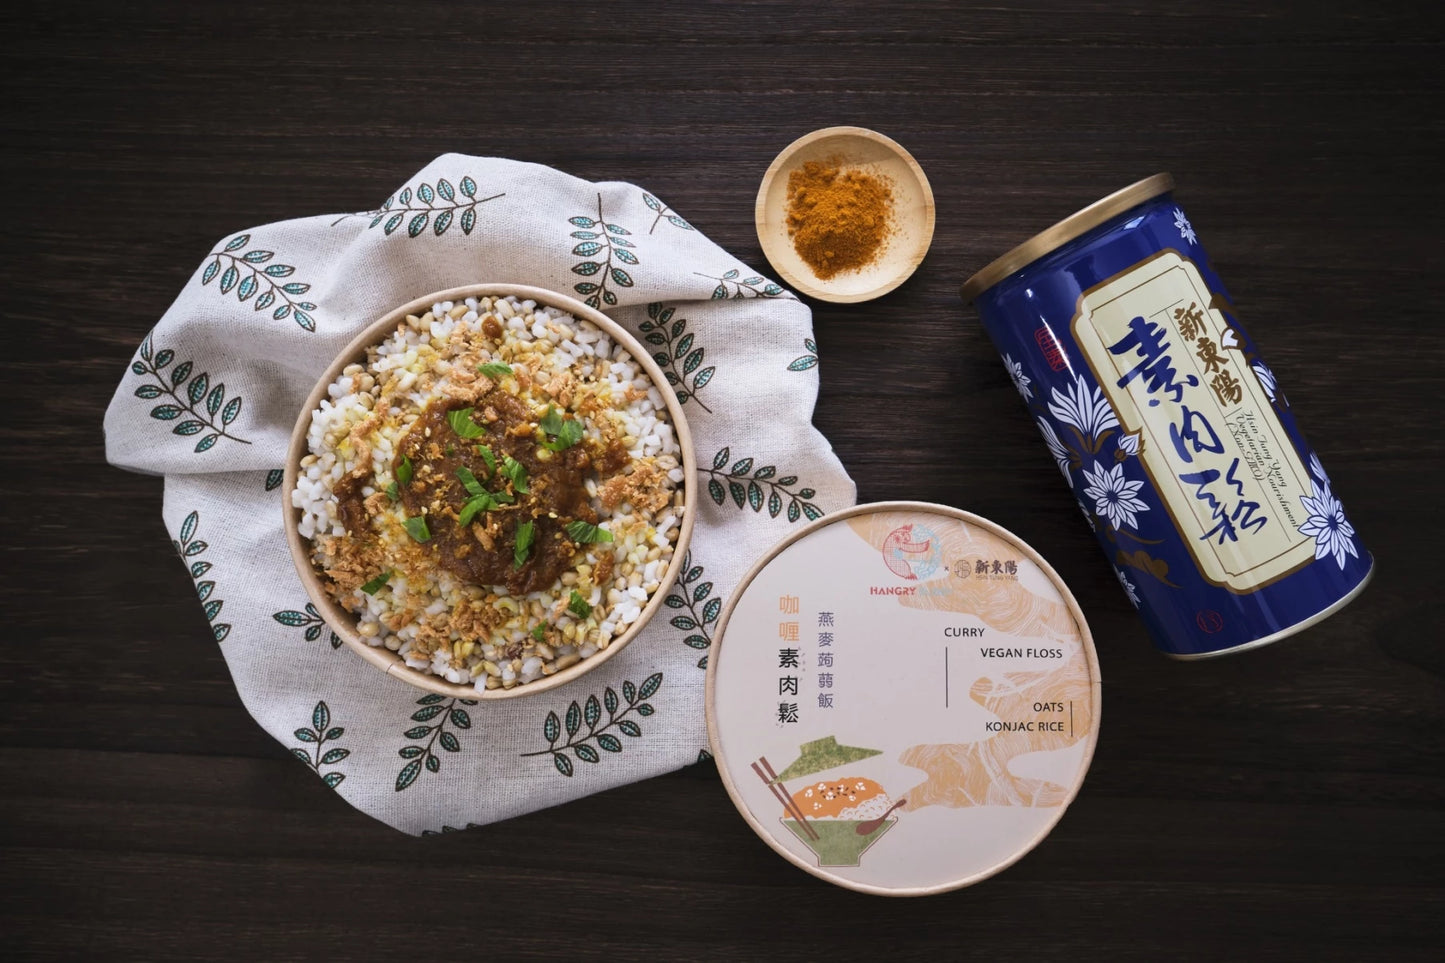 Curry Vegan Floss Oats Konjac Rice 咖喱素肉鬆燕麥蒟蒻飯